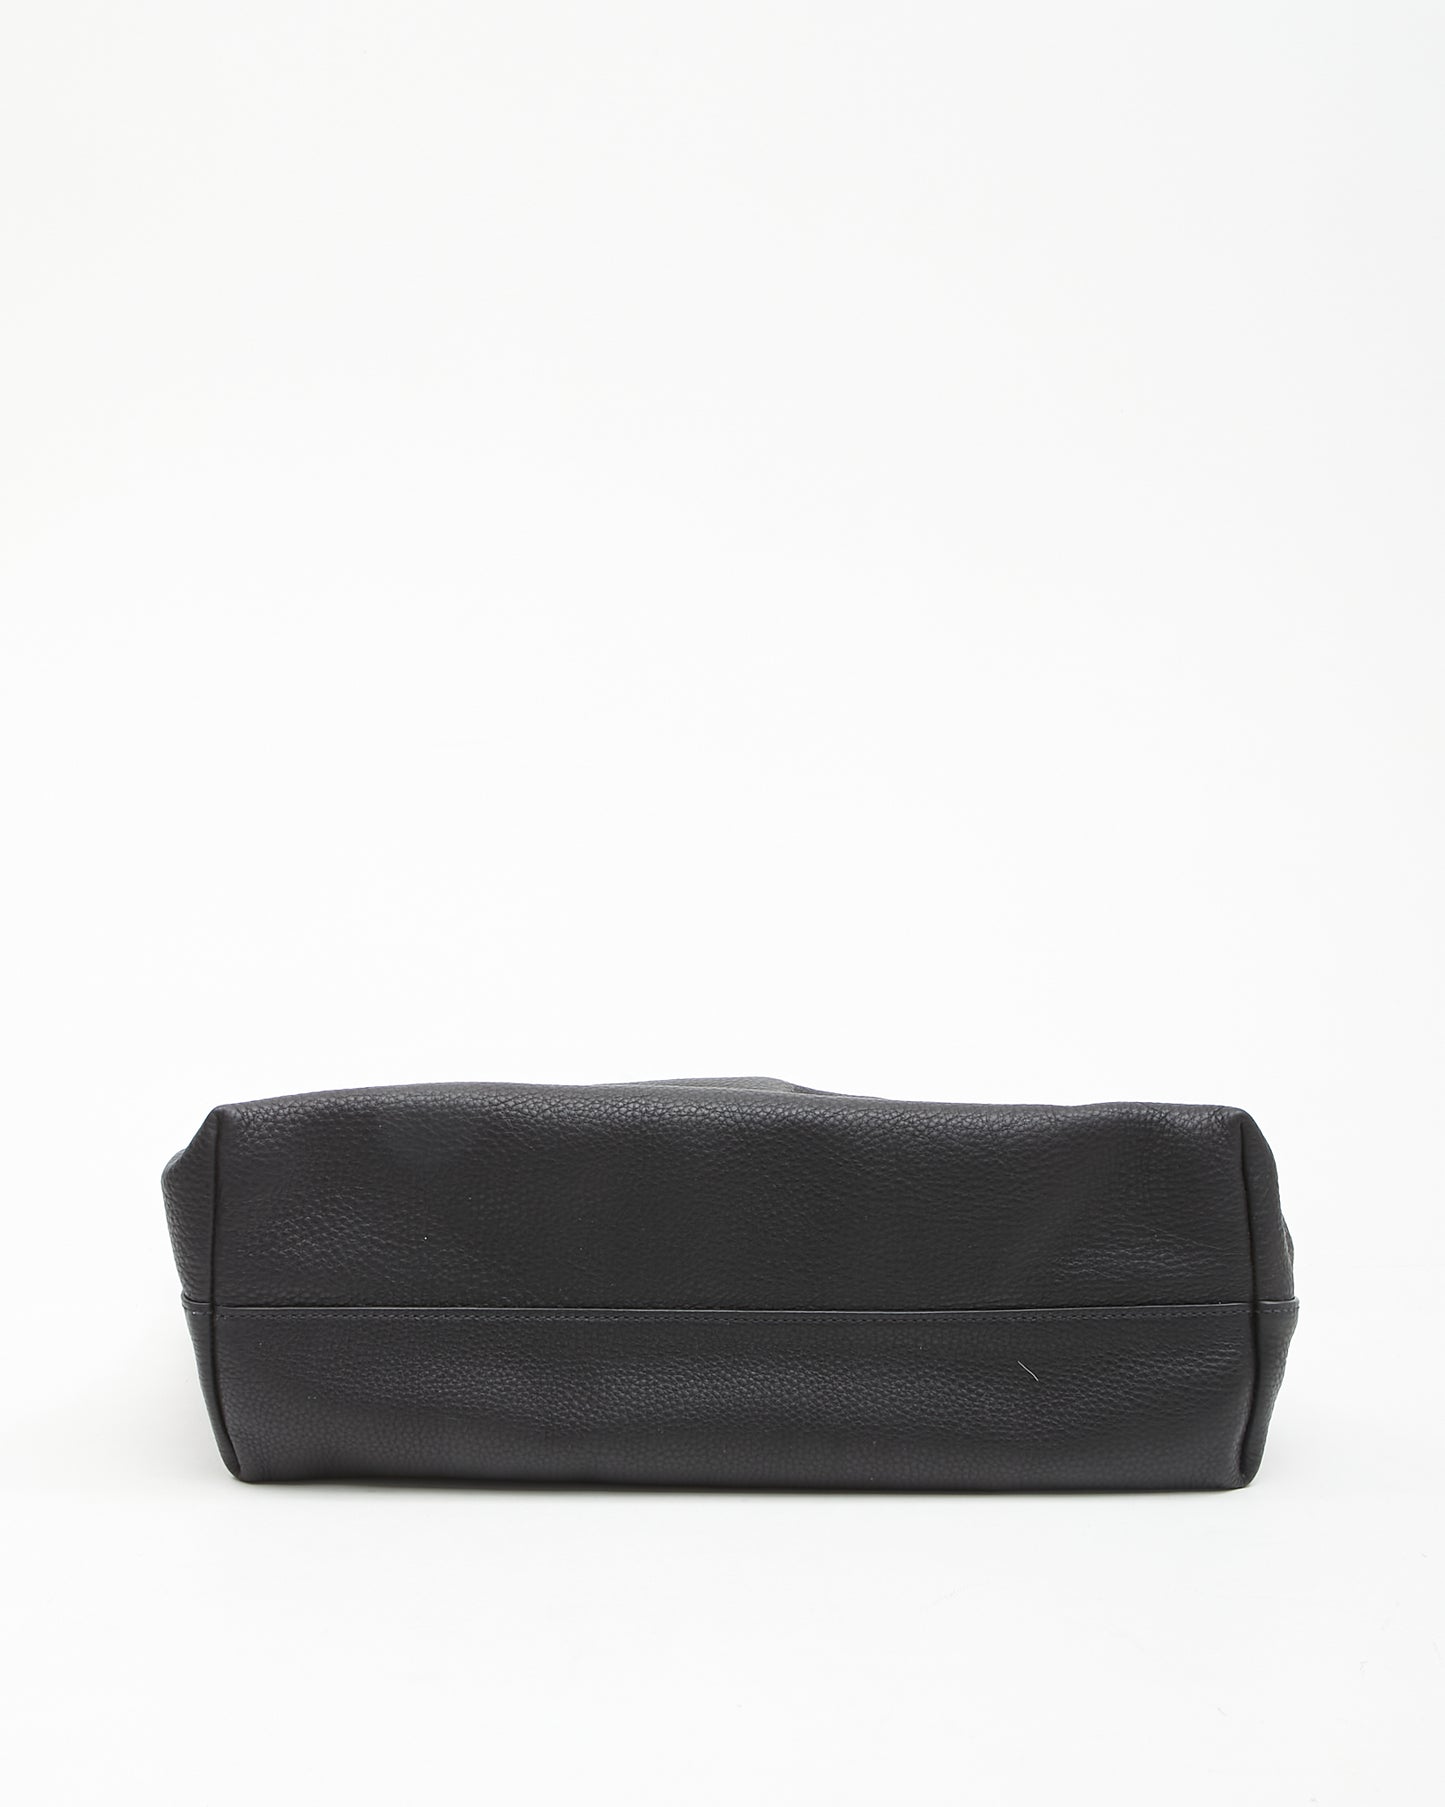 Prada Black Vitello Daino Leather Shopping Tote Bag